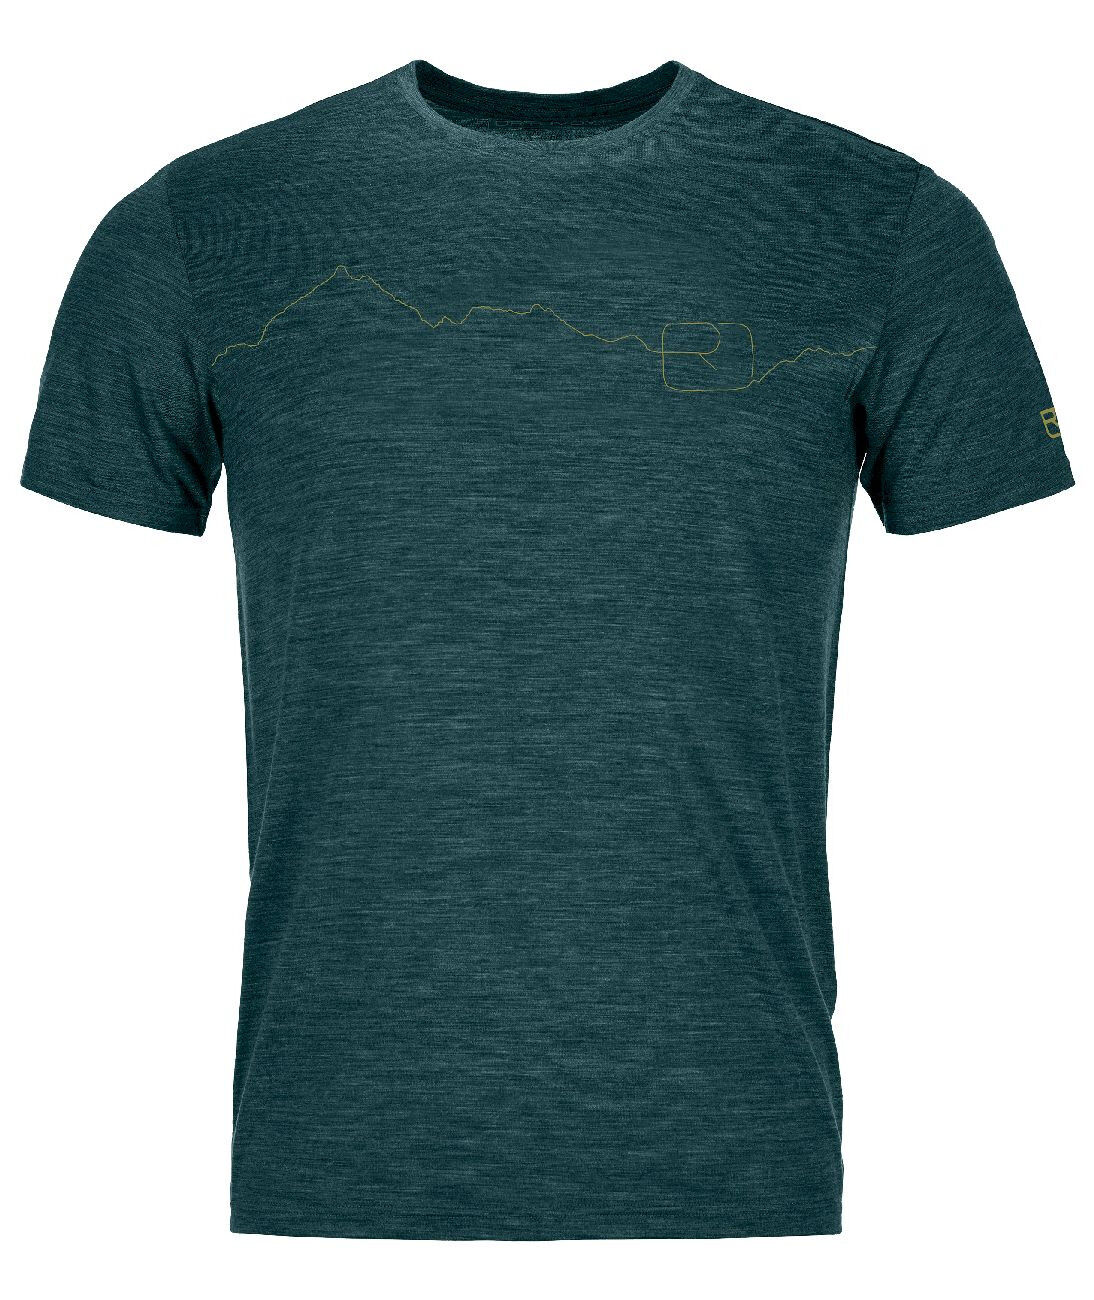 Ortovox 150 Cool Mountain TS - Camiseta - Hombre